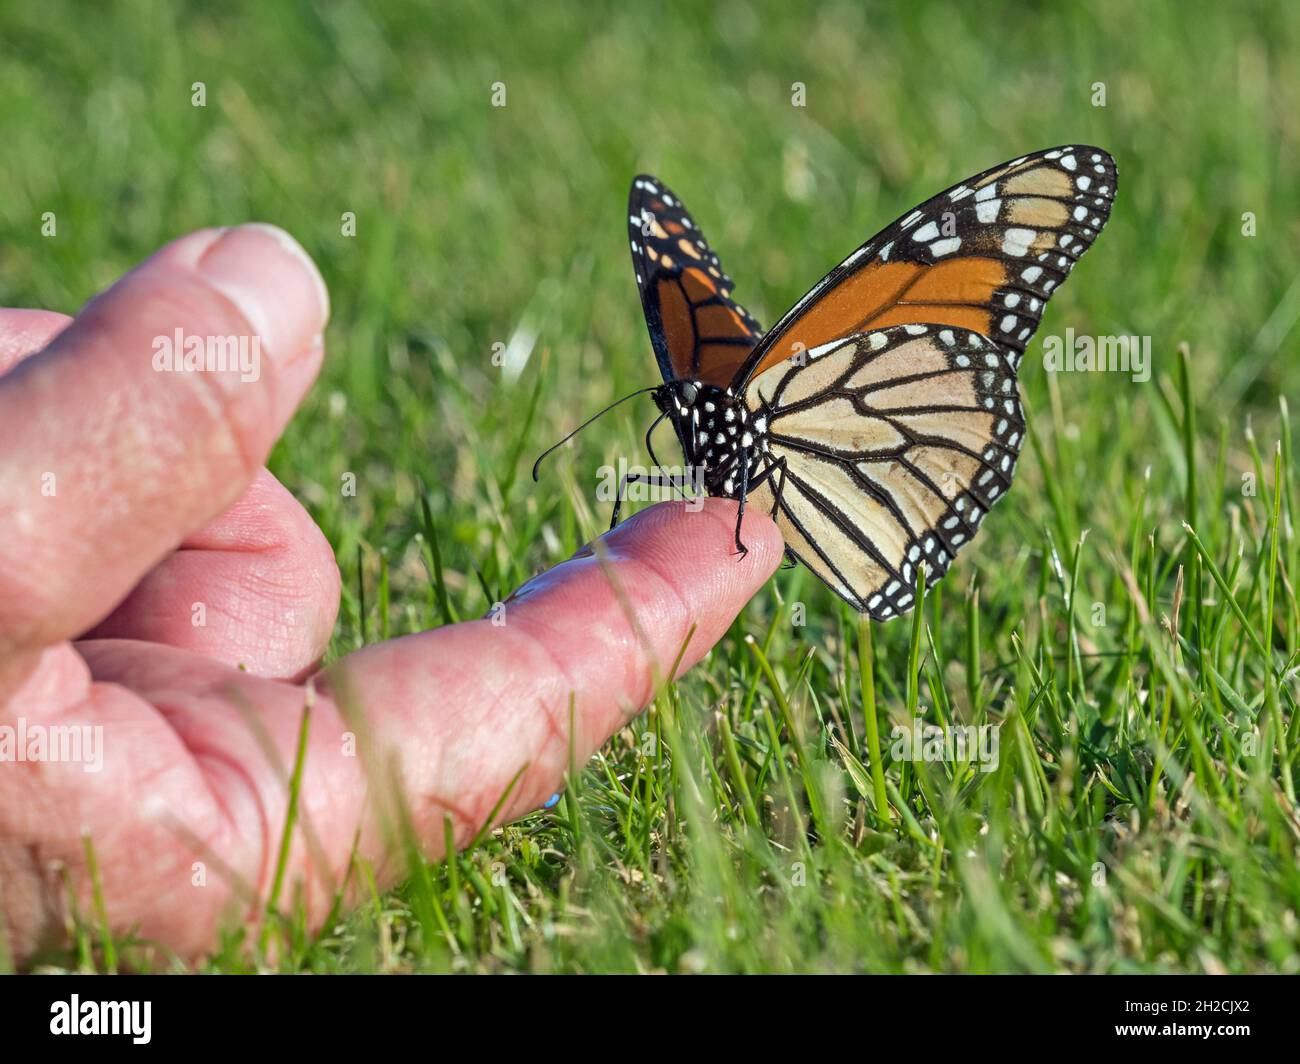 Mariposa monarca (Danaus plexippus) bebiendo agua de azúcar de un dedo, Sumburgh, Shetland, Escocia Foto de stock